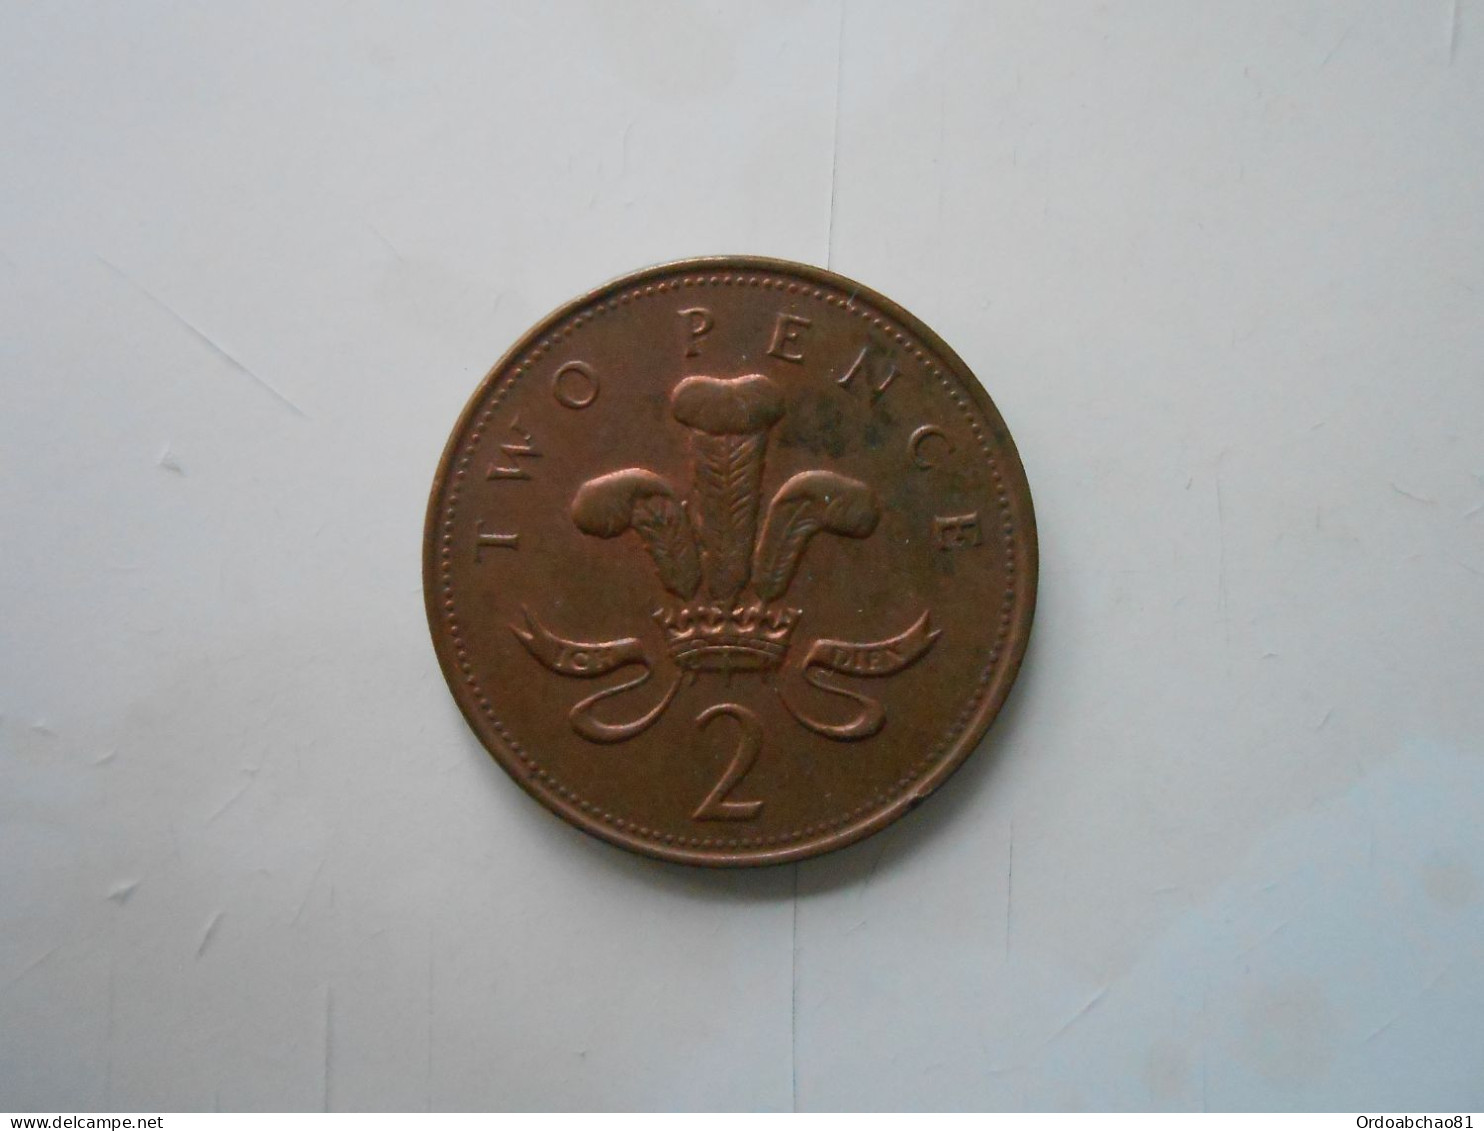 2 Pence - 2003 - 2 Pence & 2 New Pence